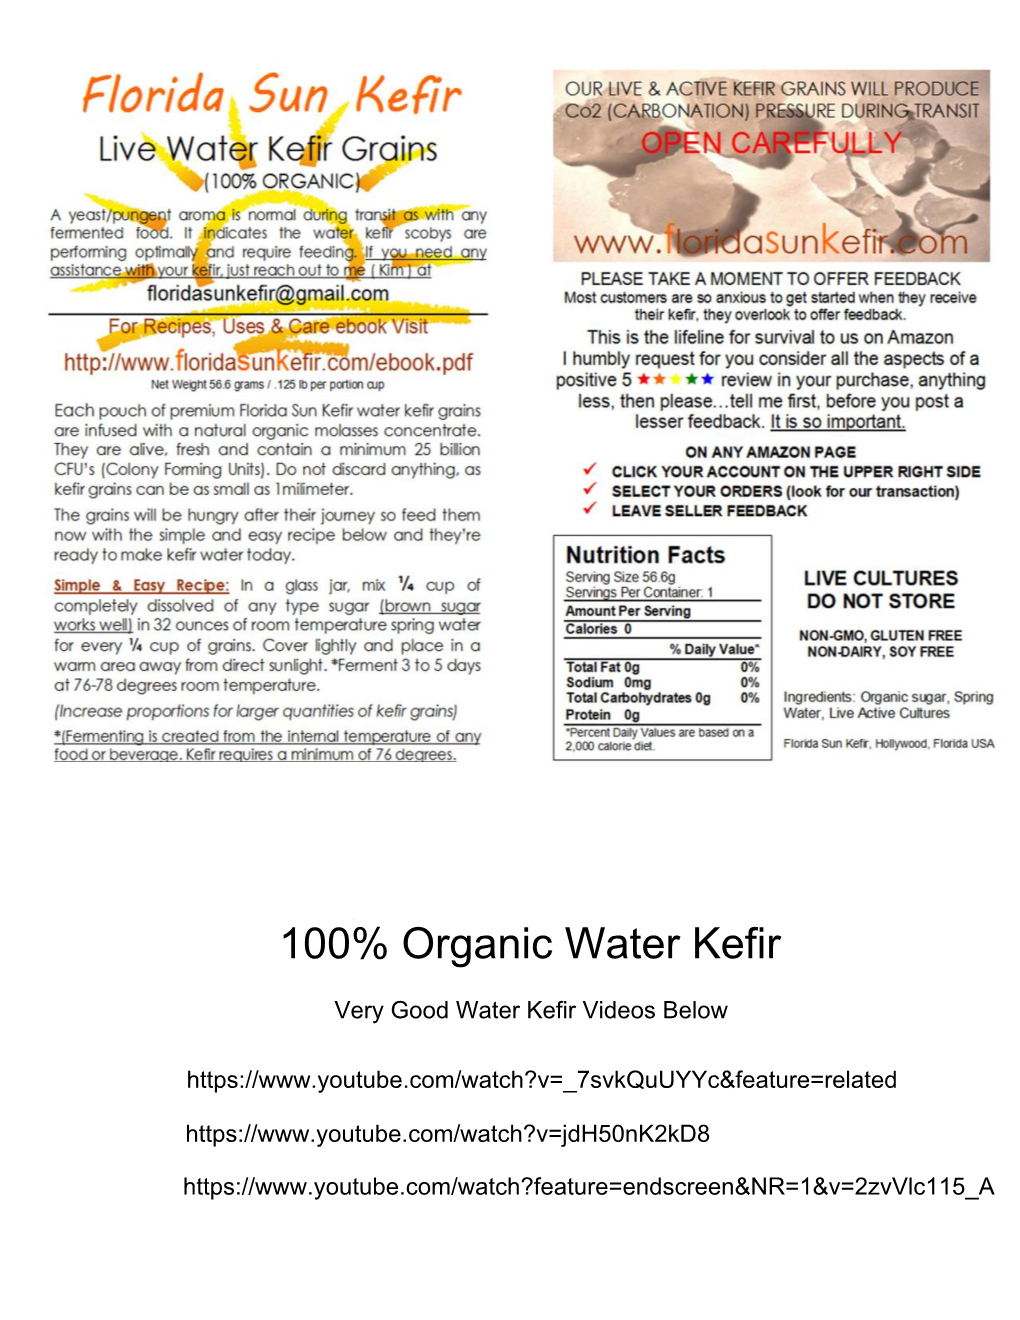 100% Organic Water Kefir